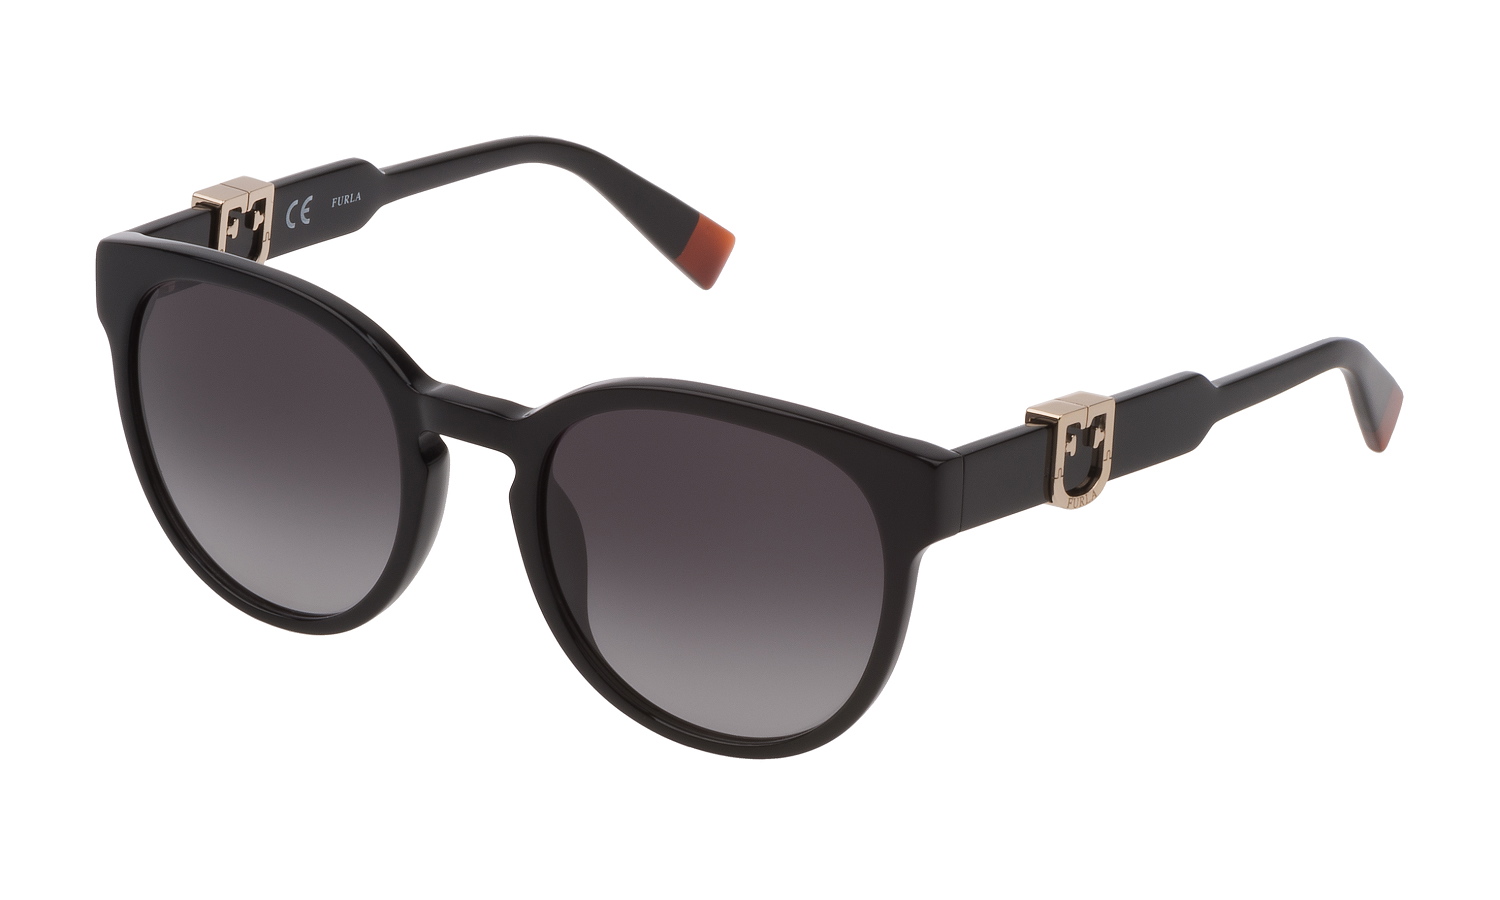 Furla SFU339 Sunglasses from $169.20 | Furla Sunglasses | Designer ...